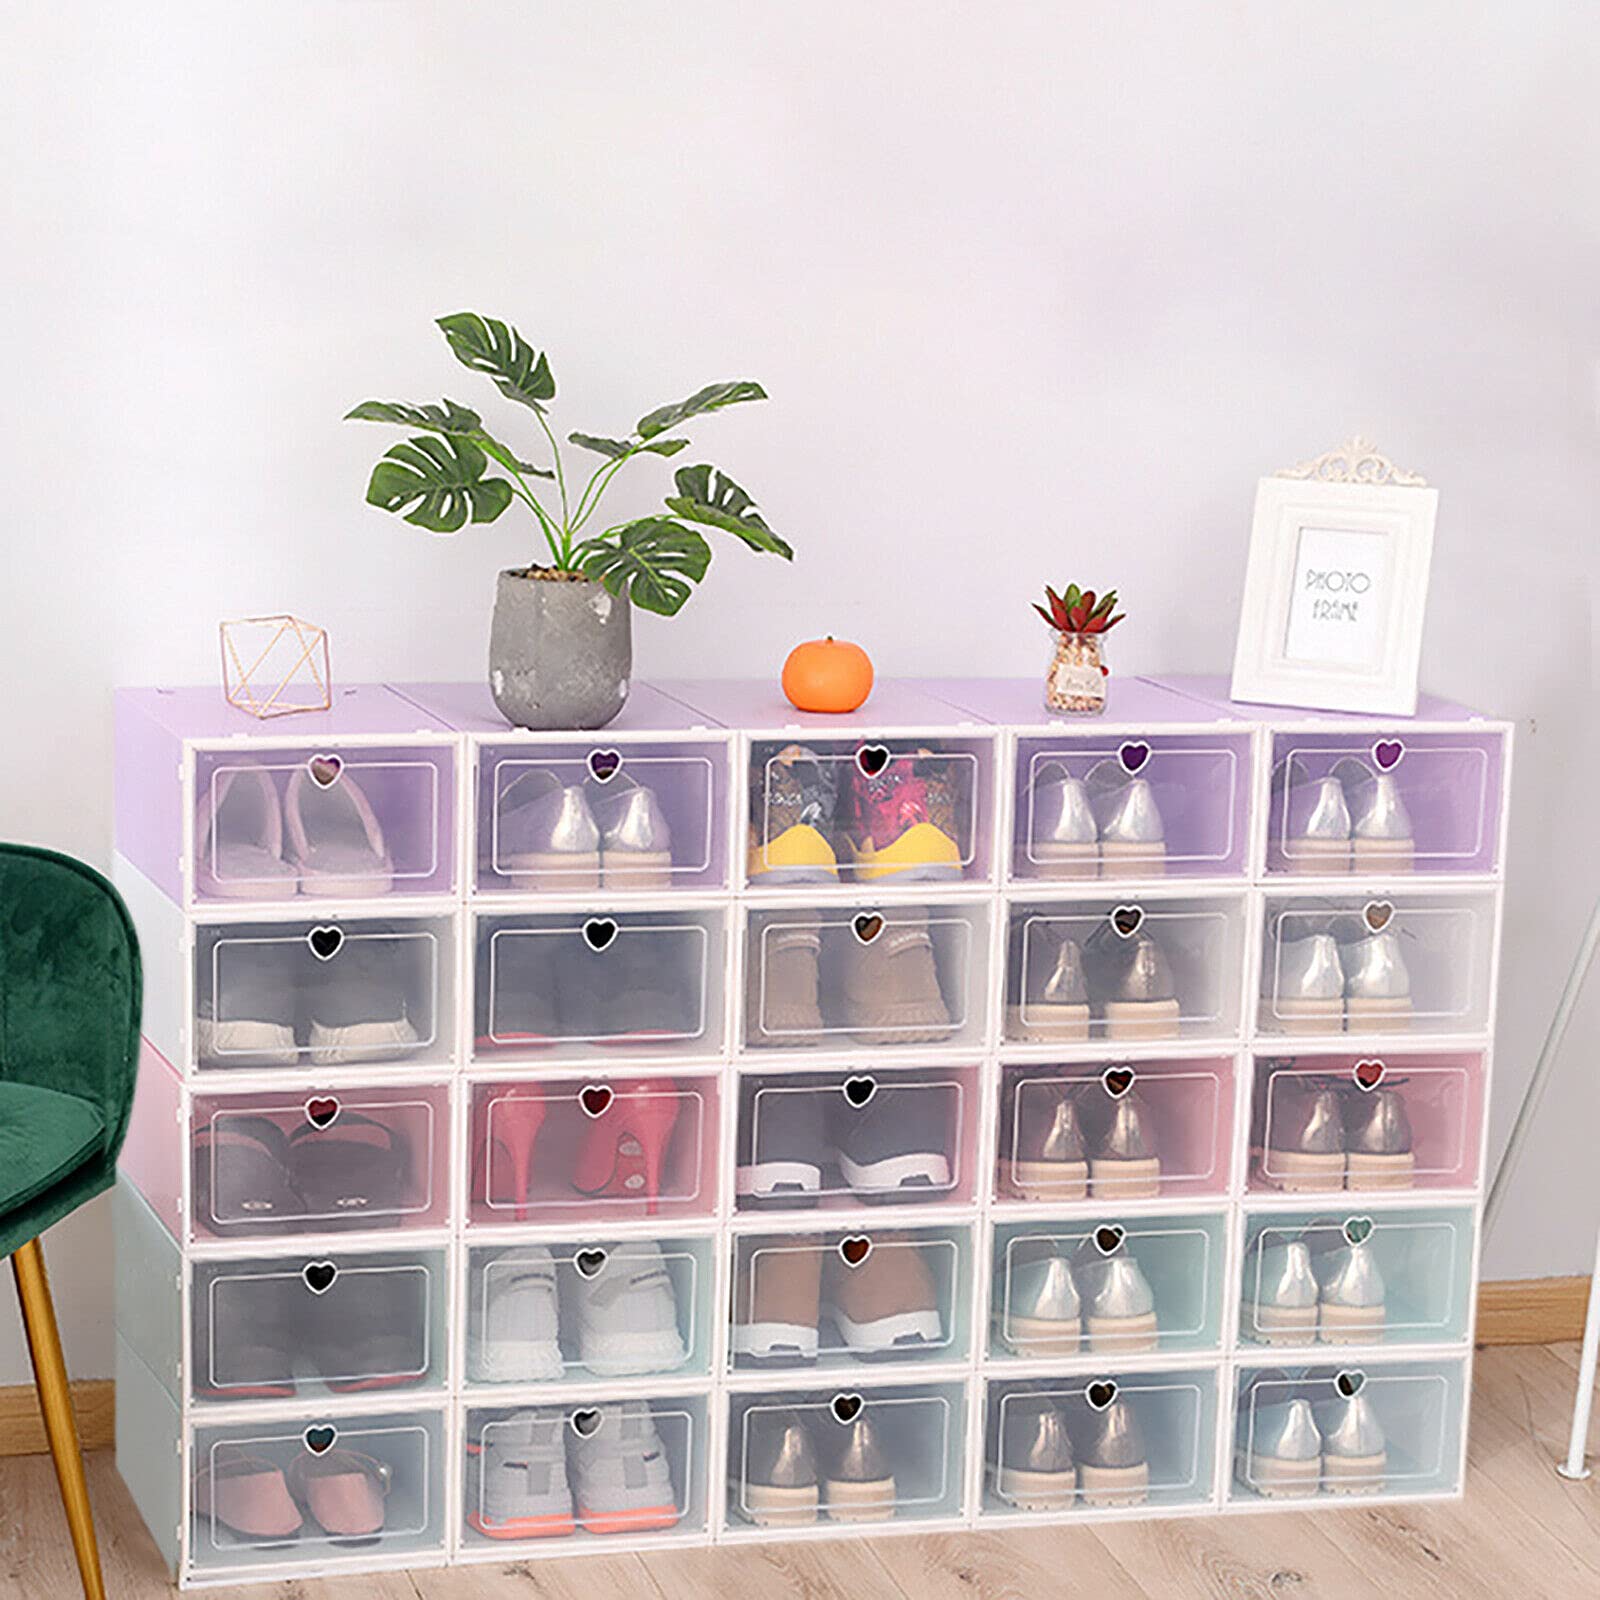 20 Schuhkarton Transparente Stapelbare Kunststoff Schuh Boxen